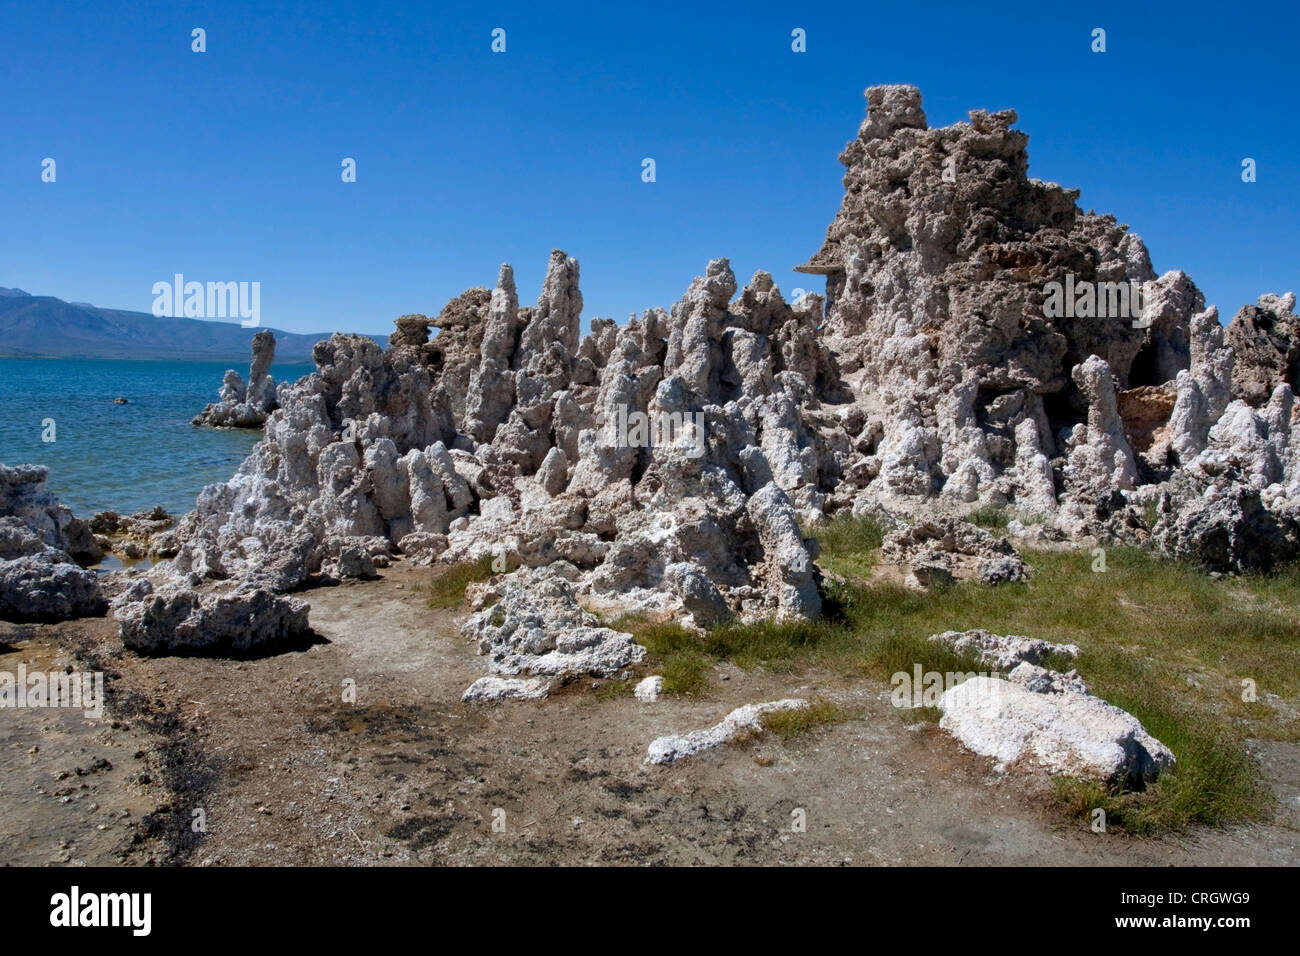 Tufa towers or columns (rock formations) at Mono Lake, Mono County, California, USA in July Stock Photo